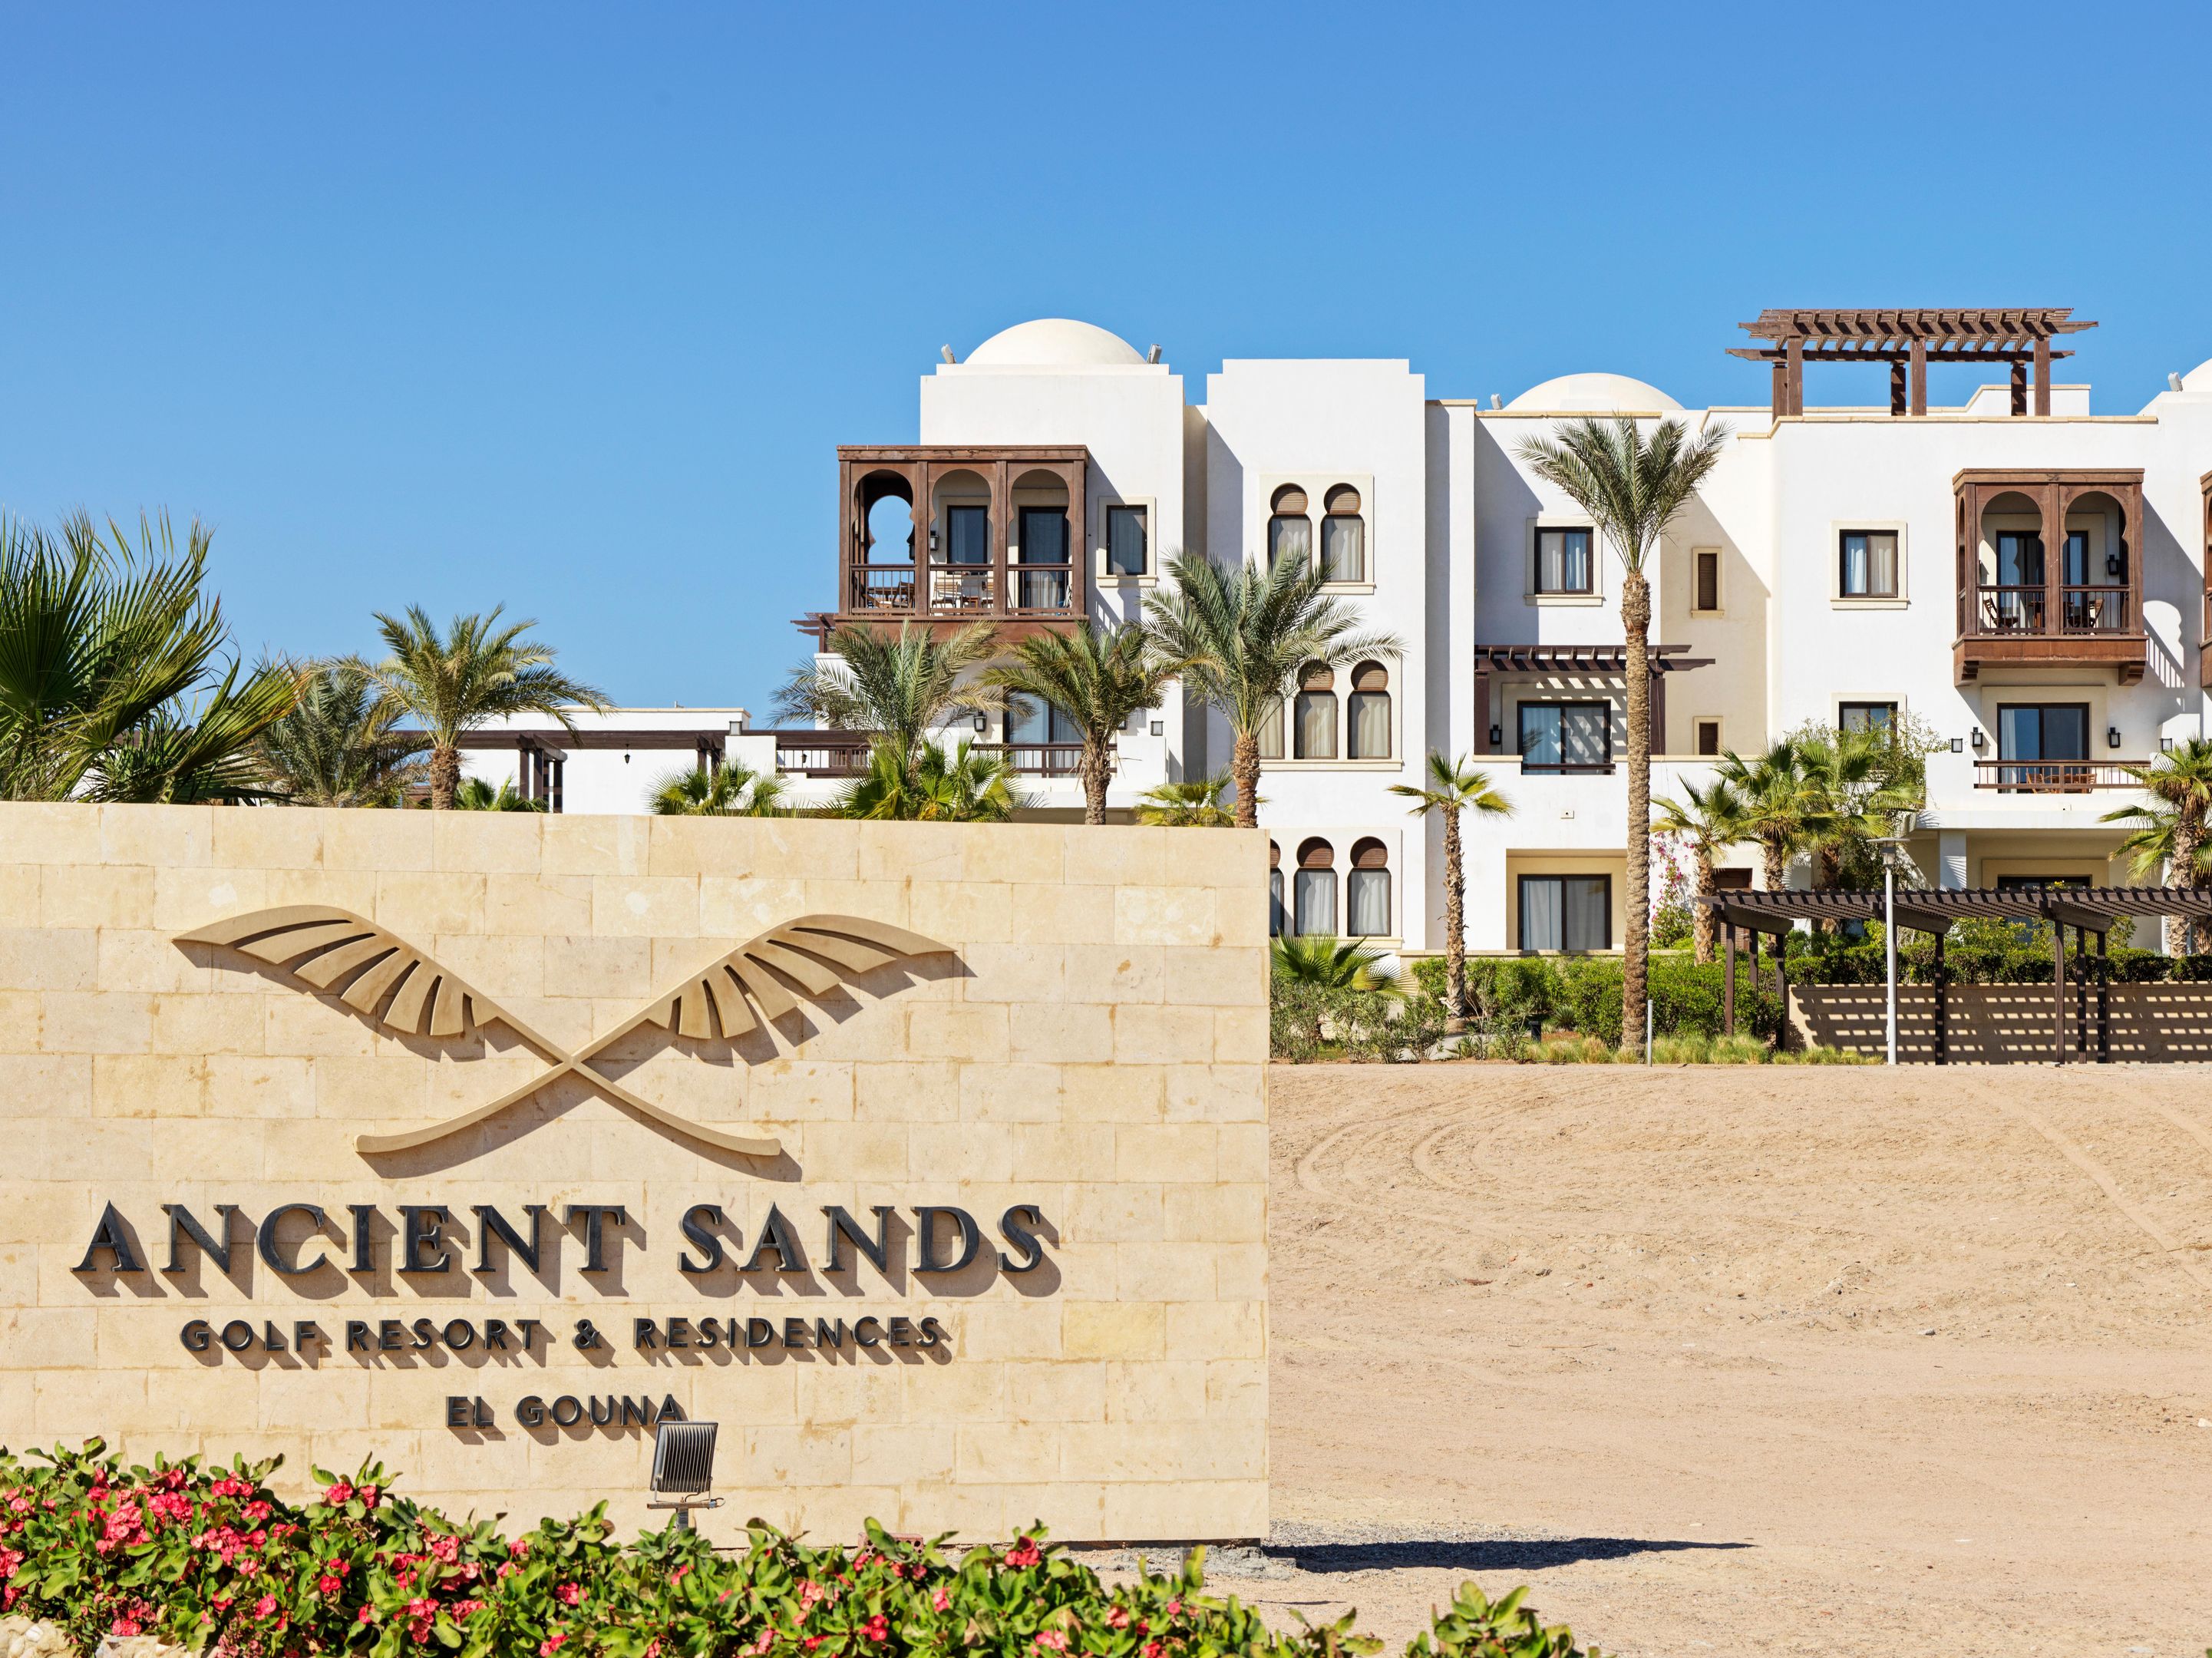 Ancient Sands Golf Resort